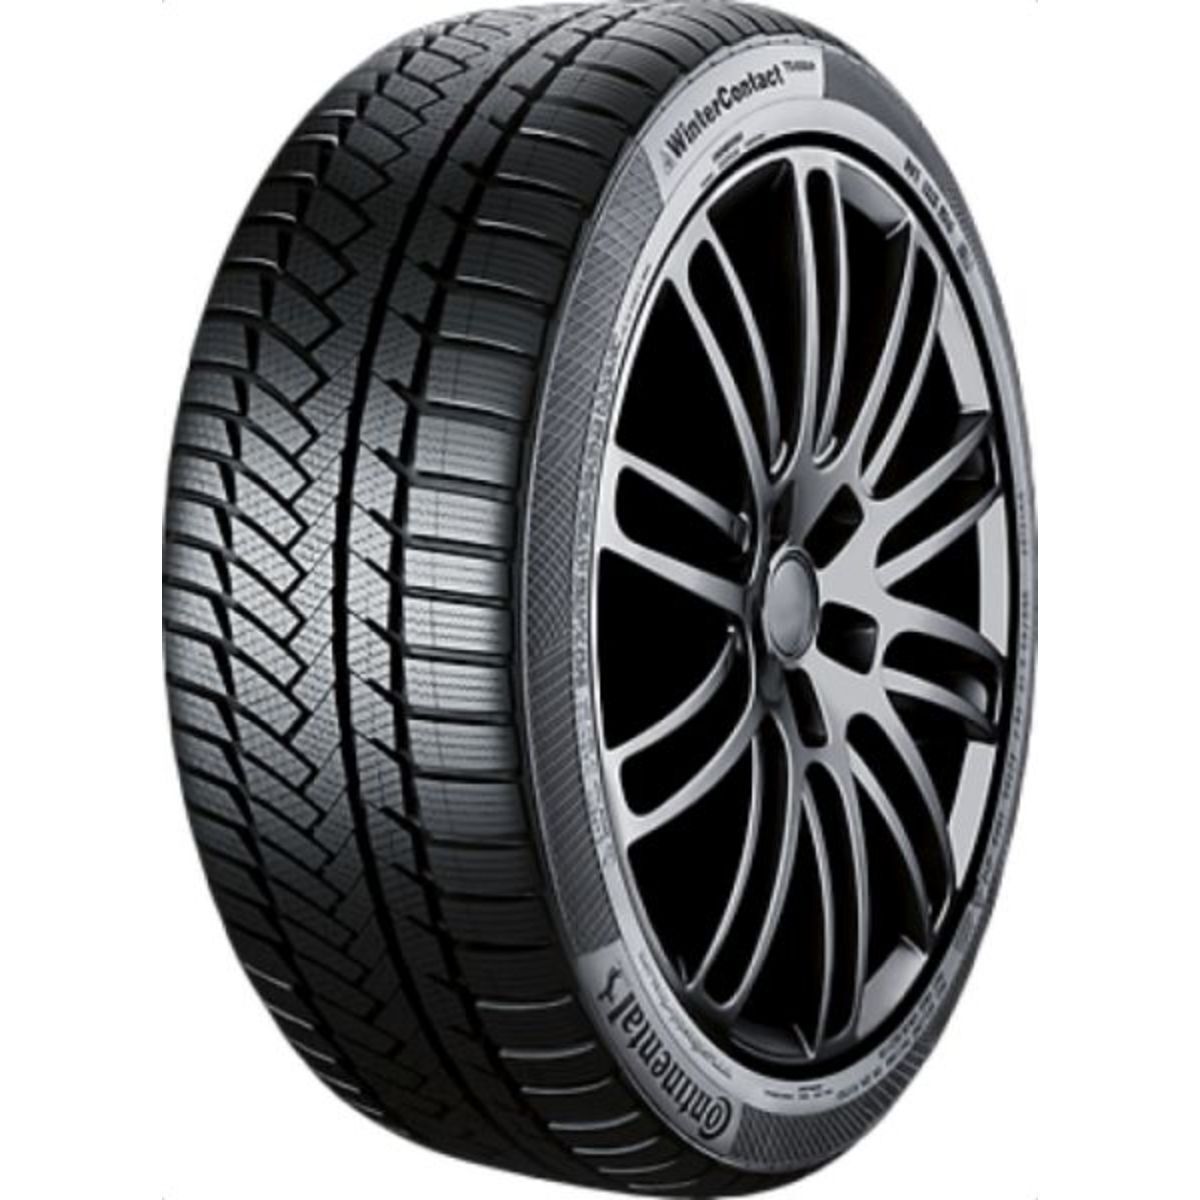 Neumáticos de invierno CONTINENTAL WinterContact TS 850 P 245/40R17 XL 95V